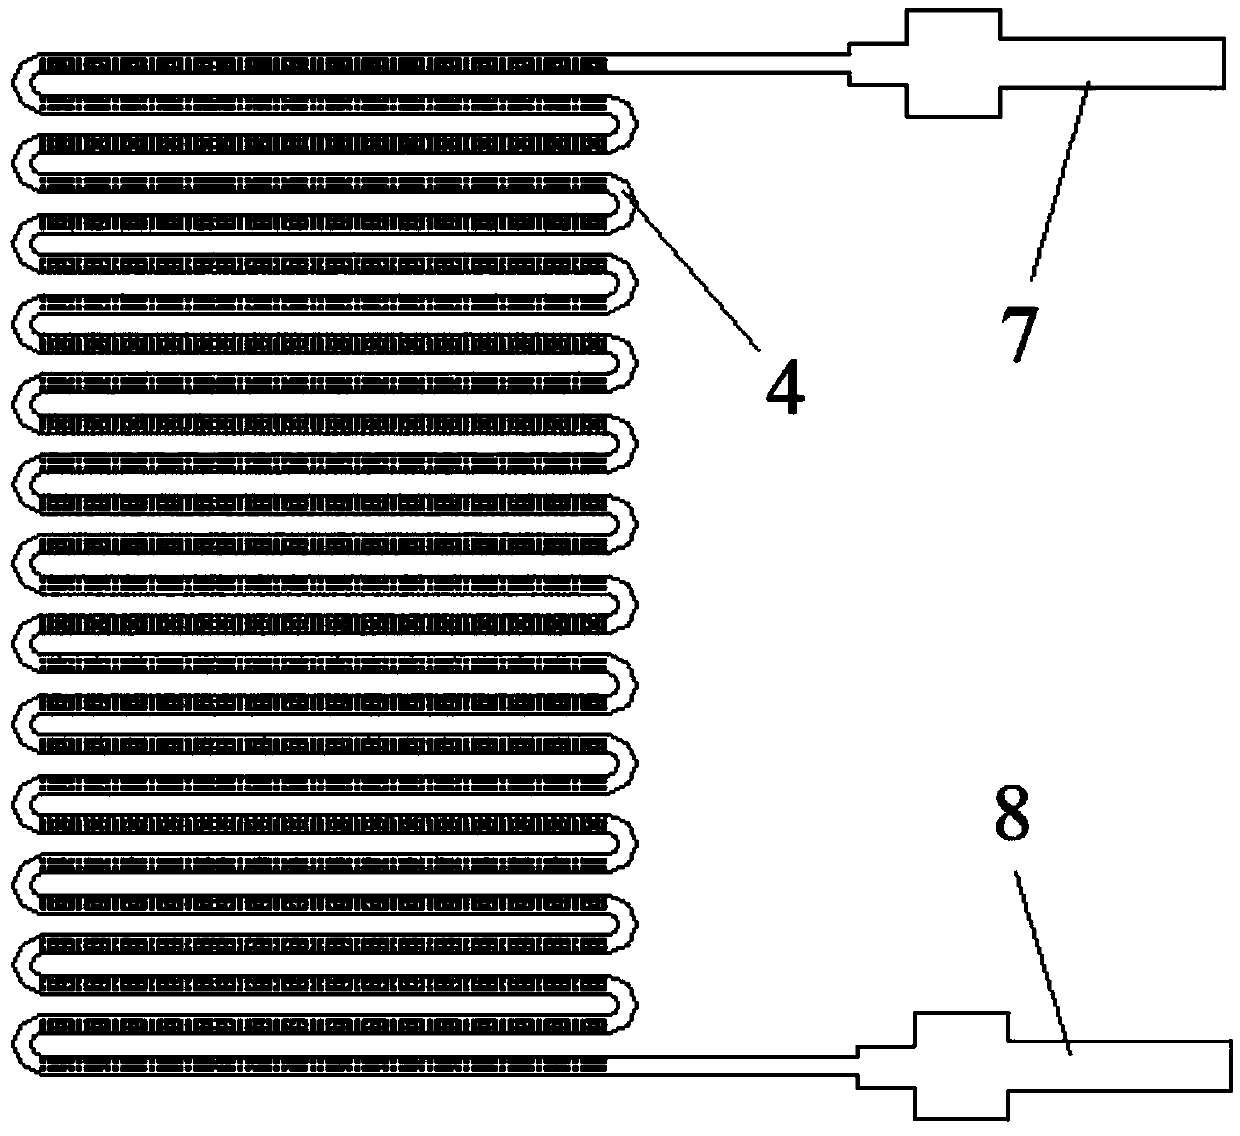 Micro gas chromatographic column chip and preparation method thereof